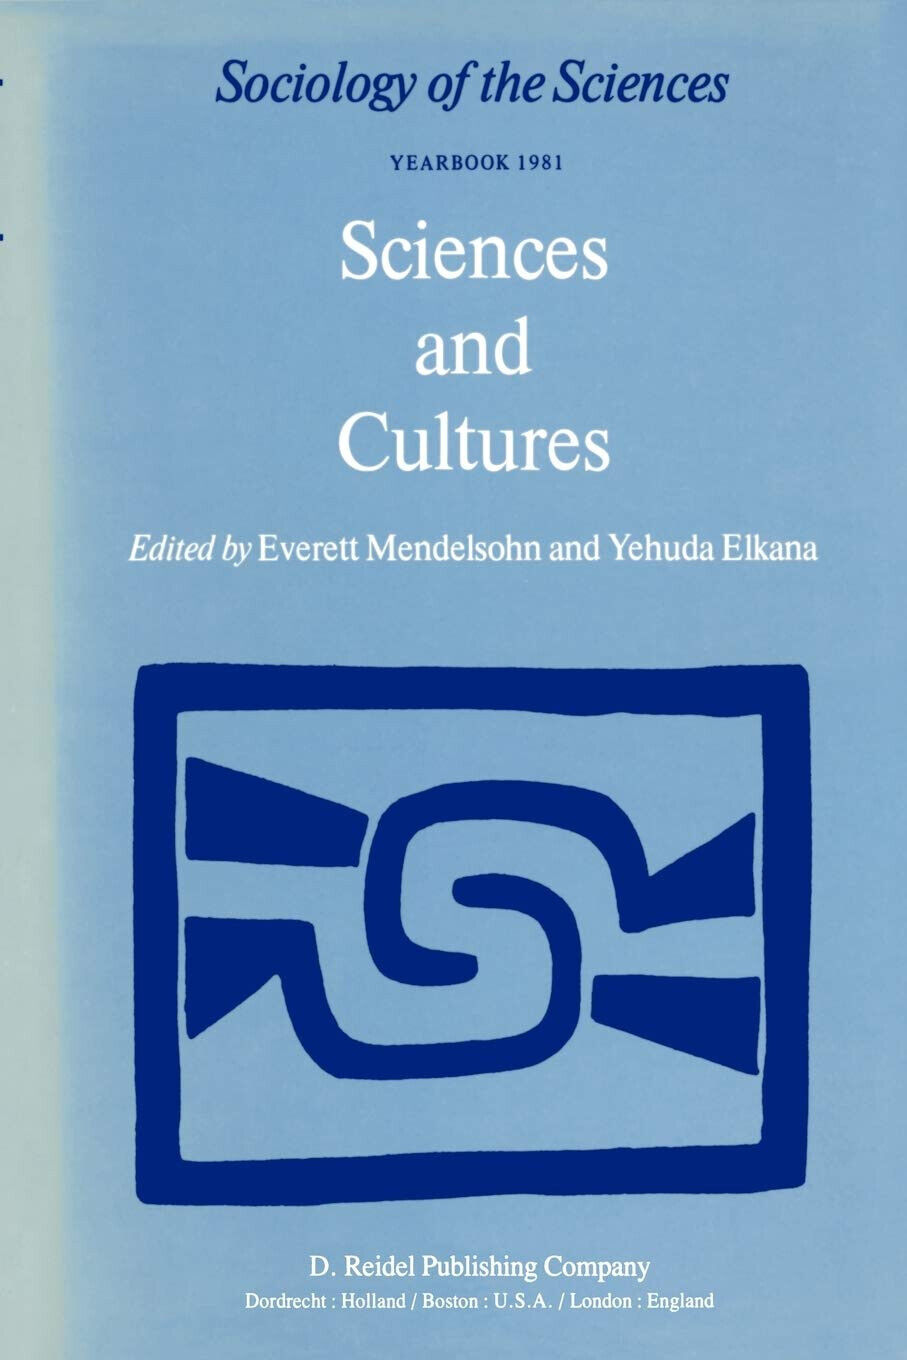 Sciences and Cultures - E. Mendelsohn - Springer, 1981